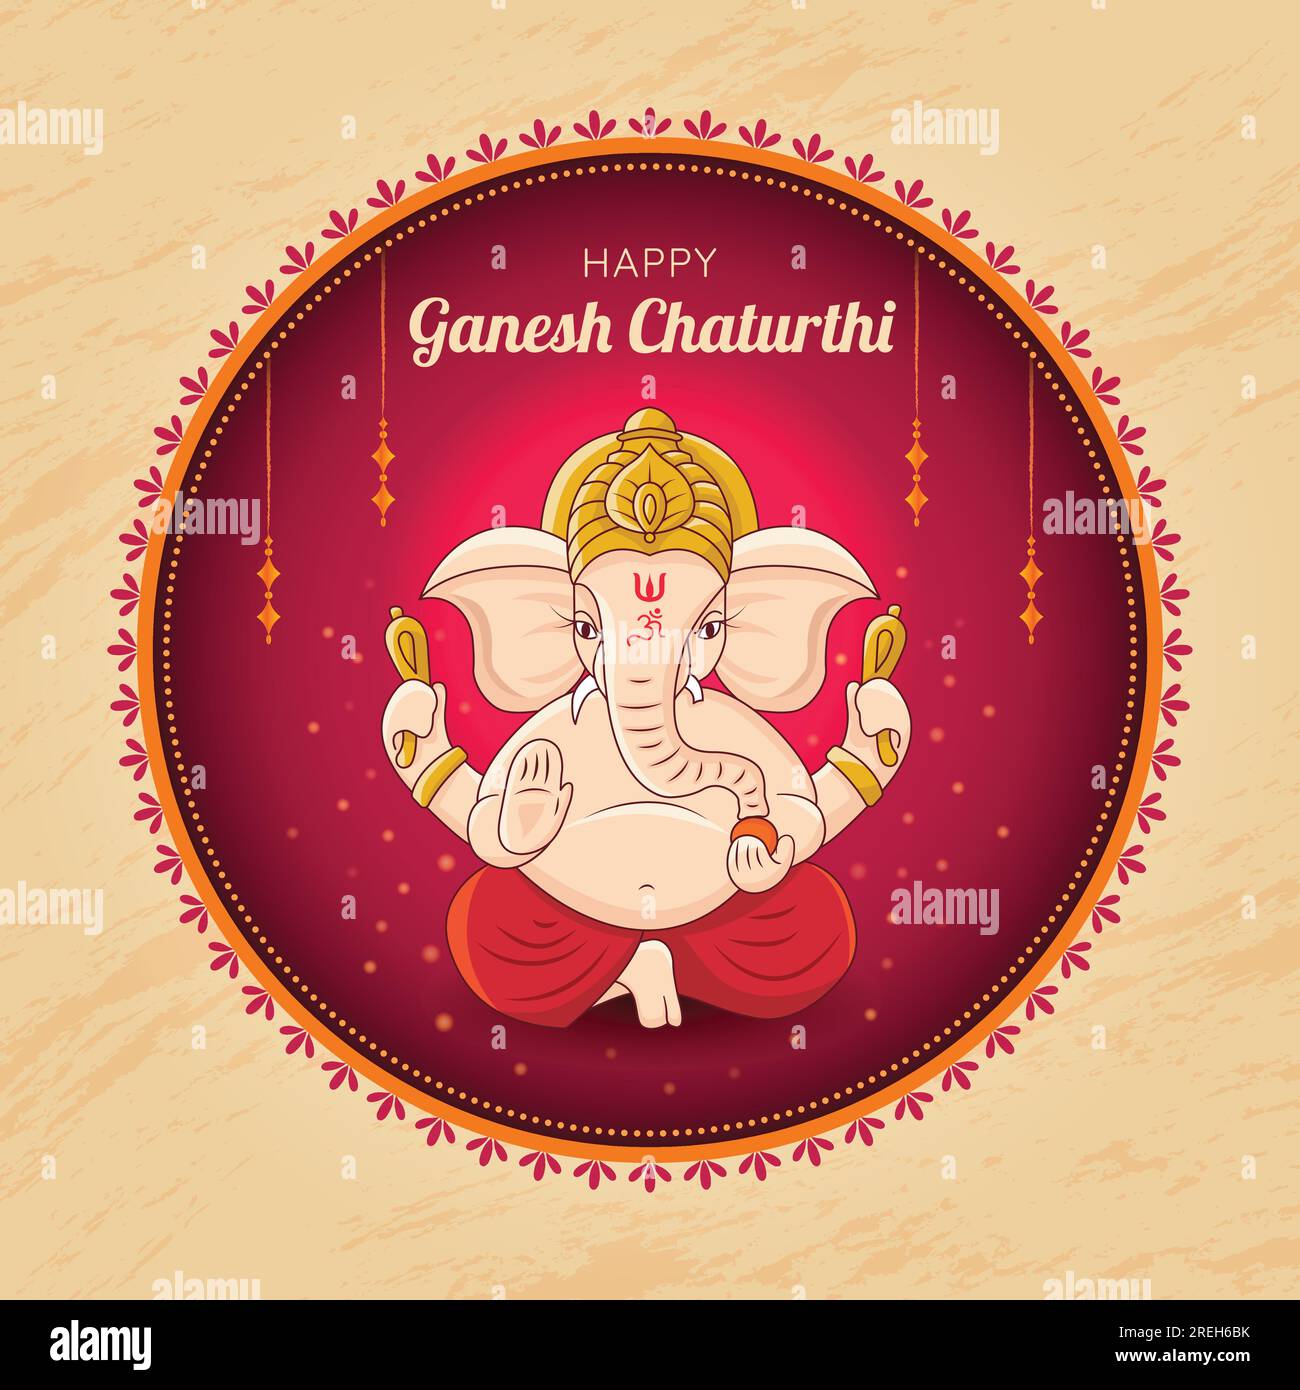 Happy Ganesh Chaturthi Vector Illustration. Grafik des indischen Lord Ganesha-Gottesfestivals. Kunstvoll verziertes Mandala-Kunstdesign-Poster. Post in sozialen Medien Stock Vektor